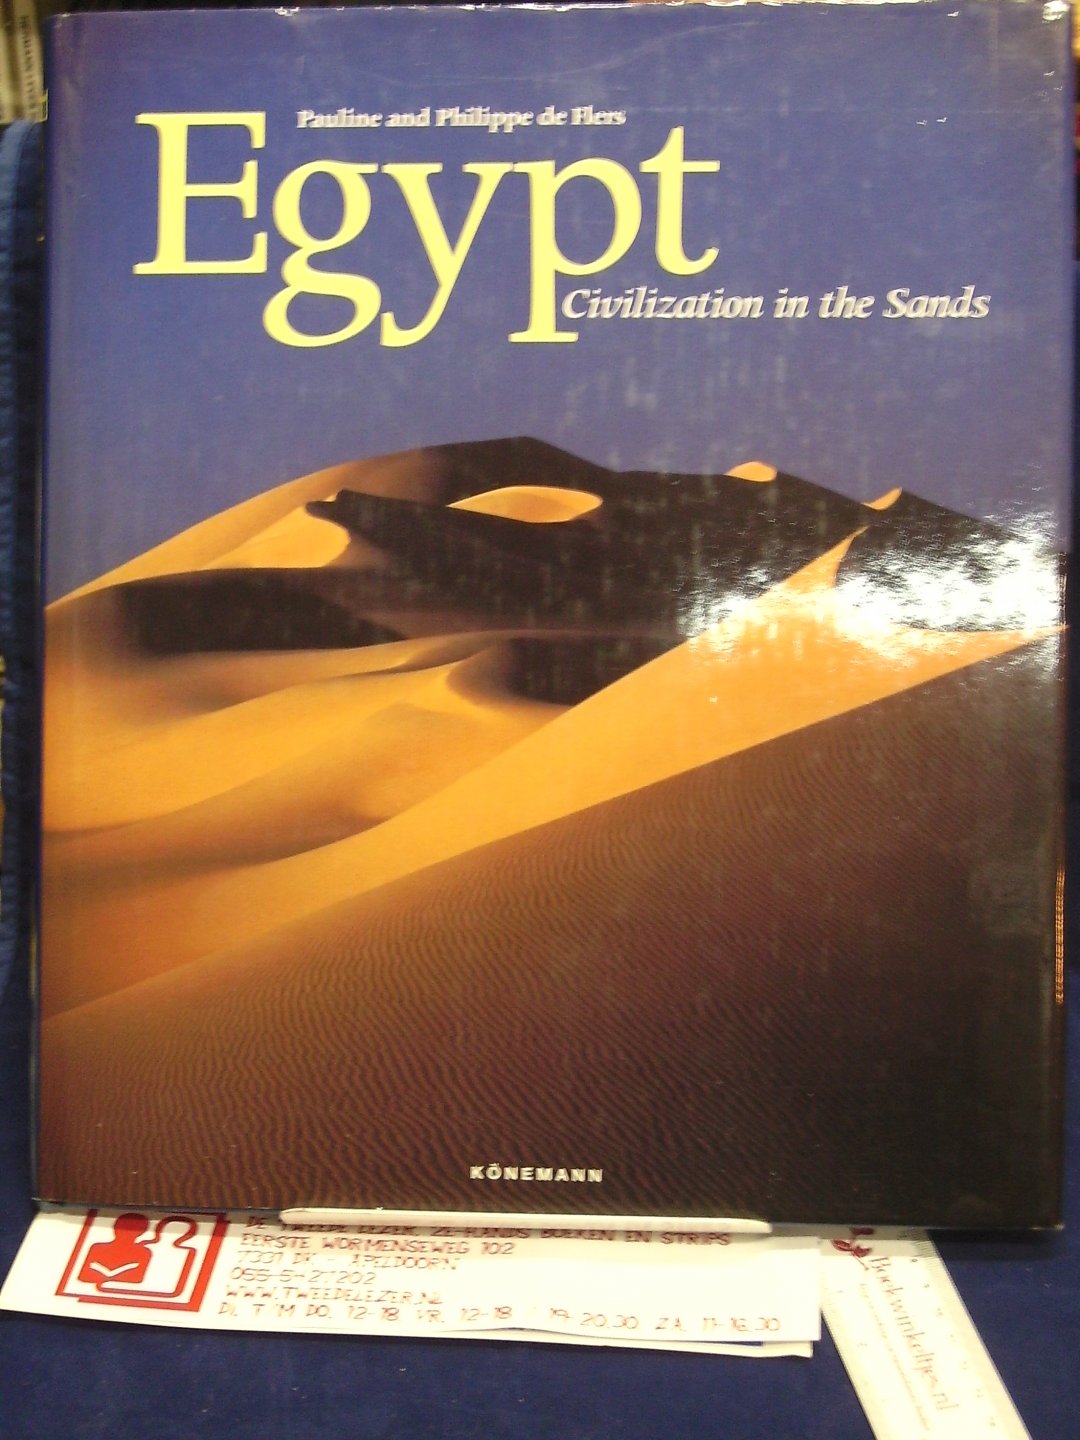 Flers, Pauline de and Philippe de Flers - Egypt / Civilization in the Sand